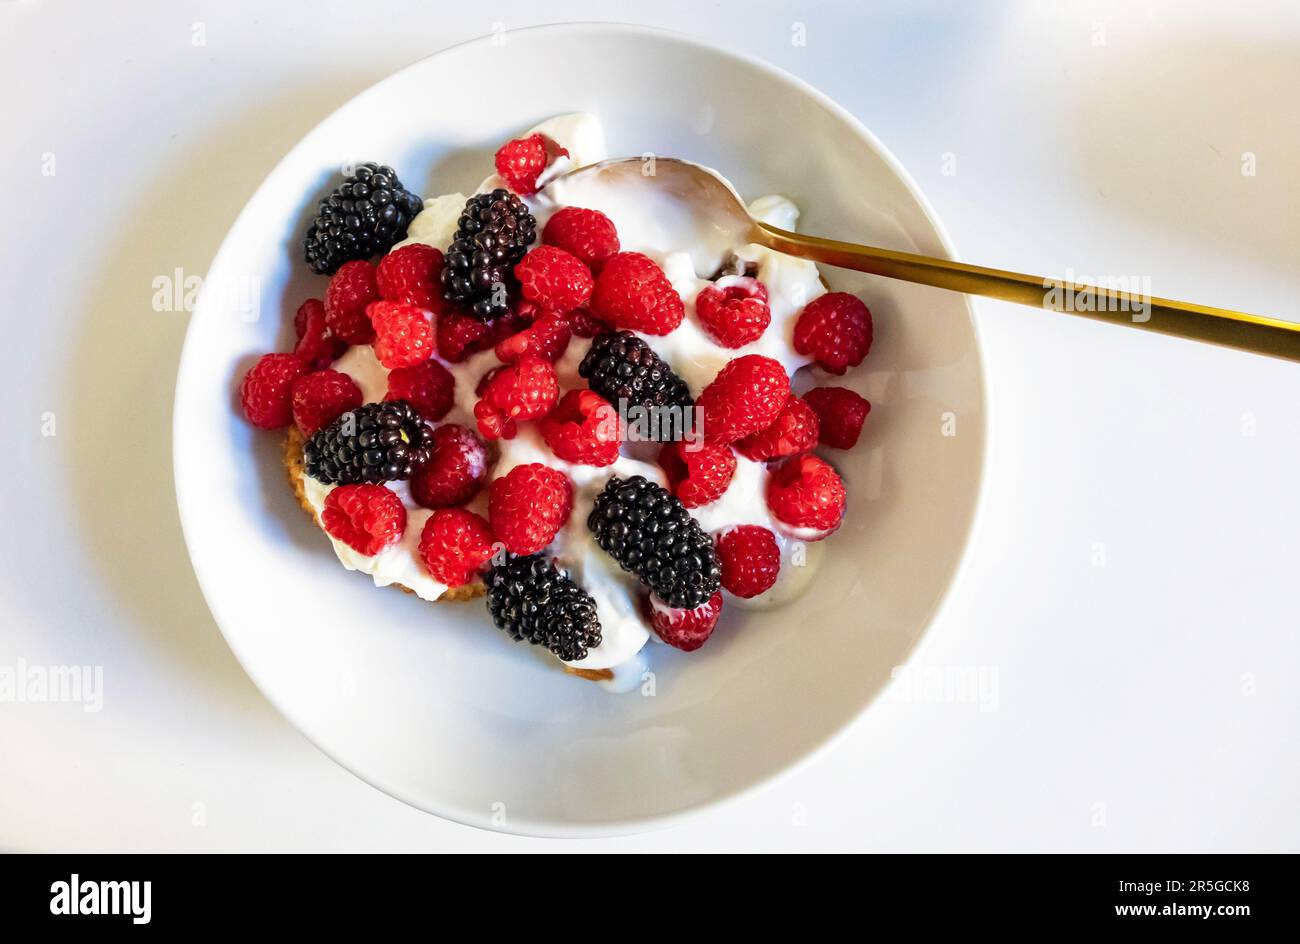 Raspberries and blackberries with yogurt in a white bowl Stock Photo